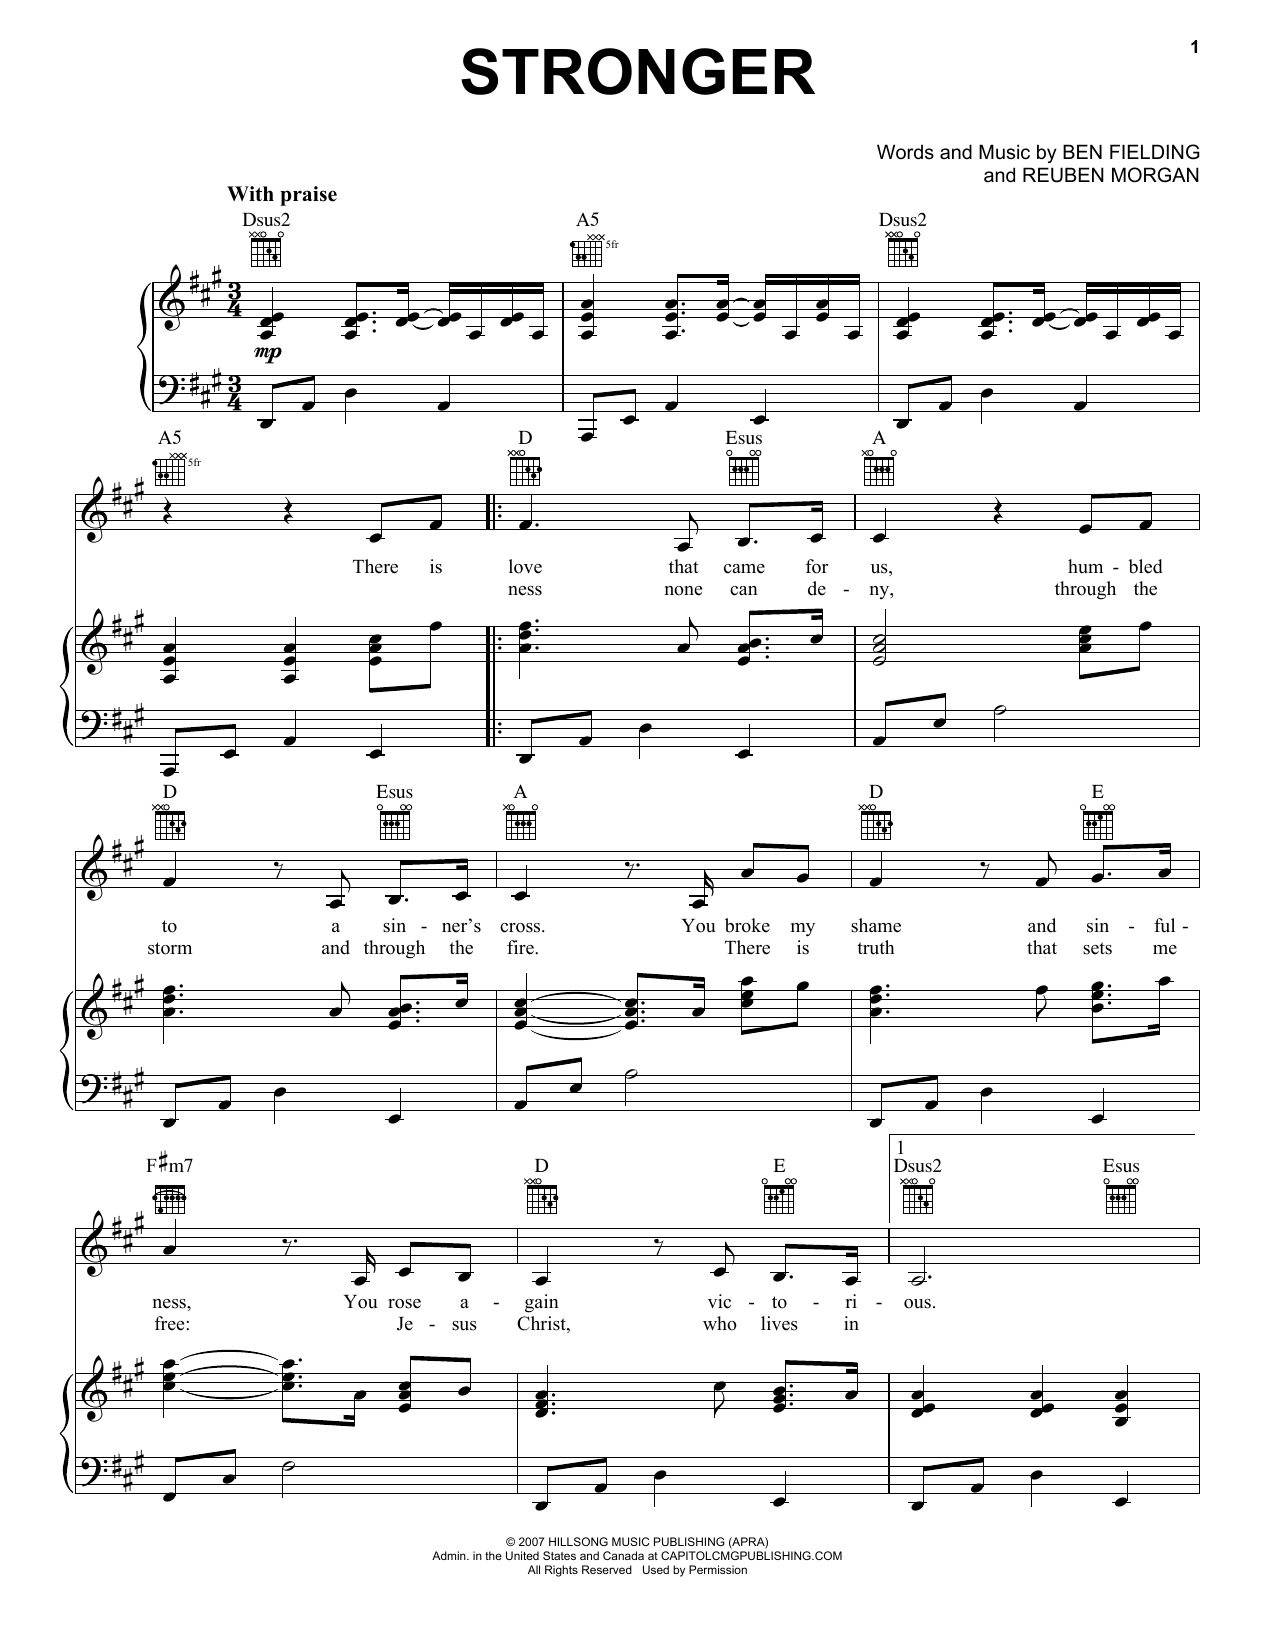 Reuben Morgan Stronger Sheet Music Notes & Chords for Melody Line, Lyrics & Chords - Download or Print PDF